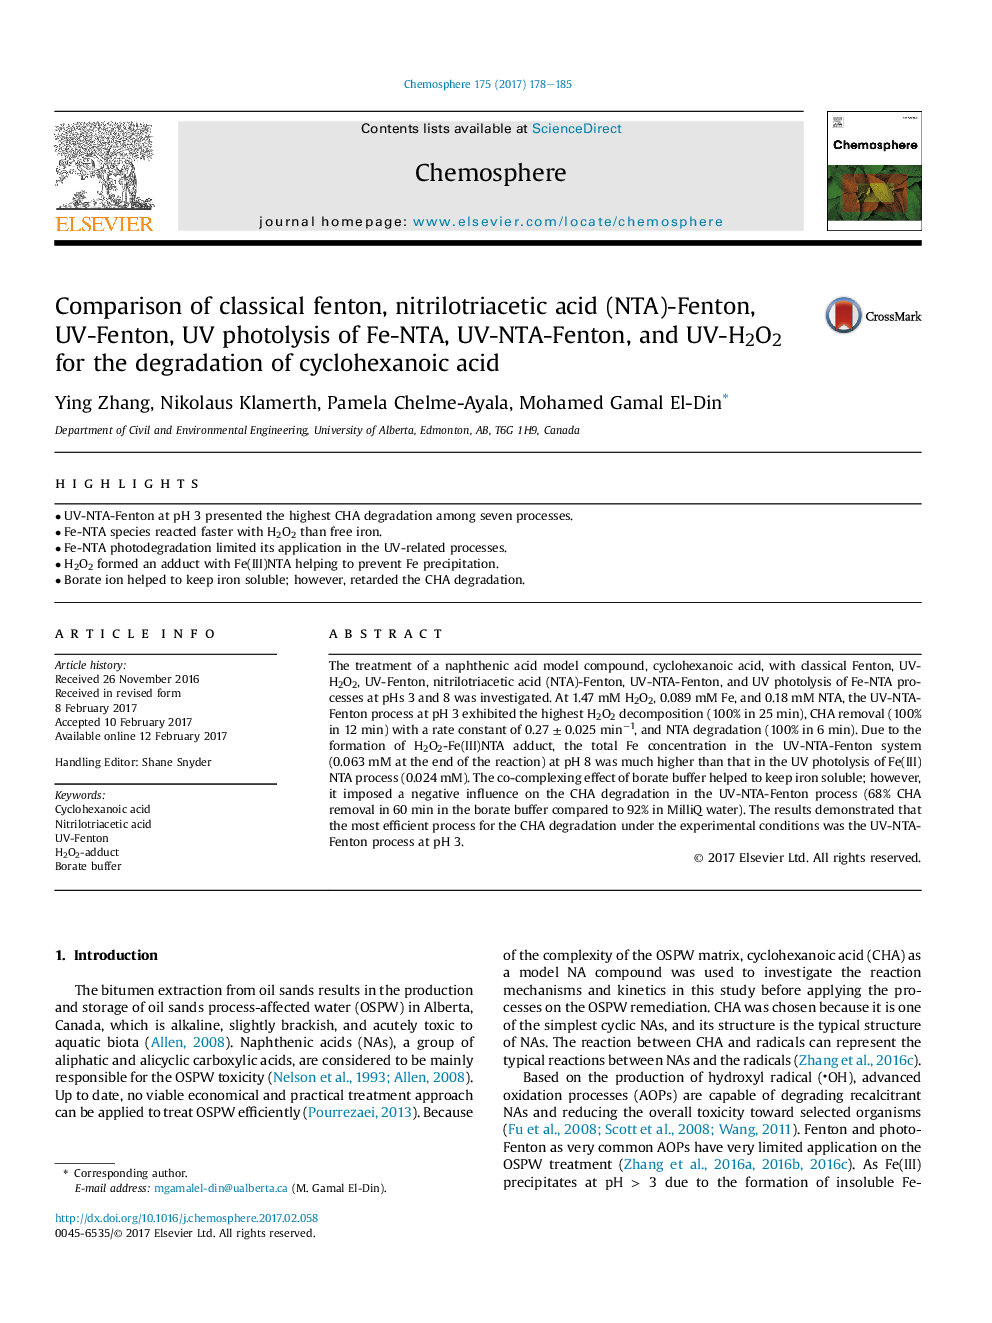 Comparison of classical fenton, nitrilotriacetic acid (NTA)-Fenton, UV-Fenton, UV photolysis of Fe-NTA, UV-NTA-Fenton, and UV-H2O2 for the degradation of cyclohexanoic acid